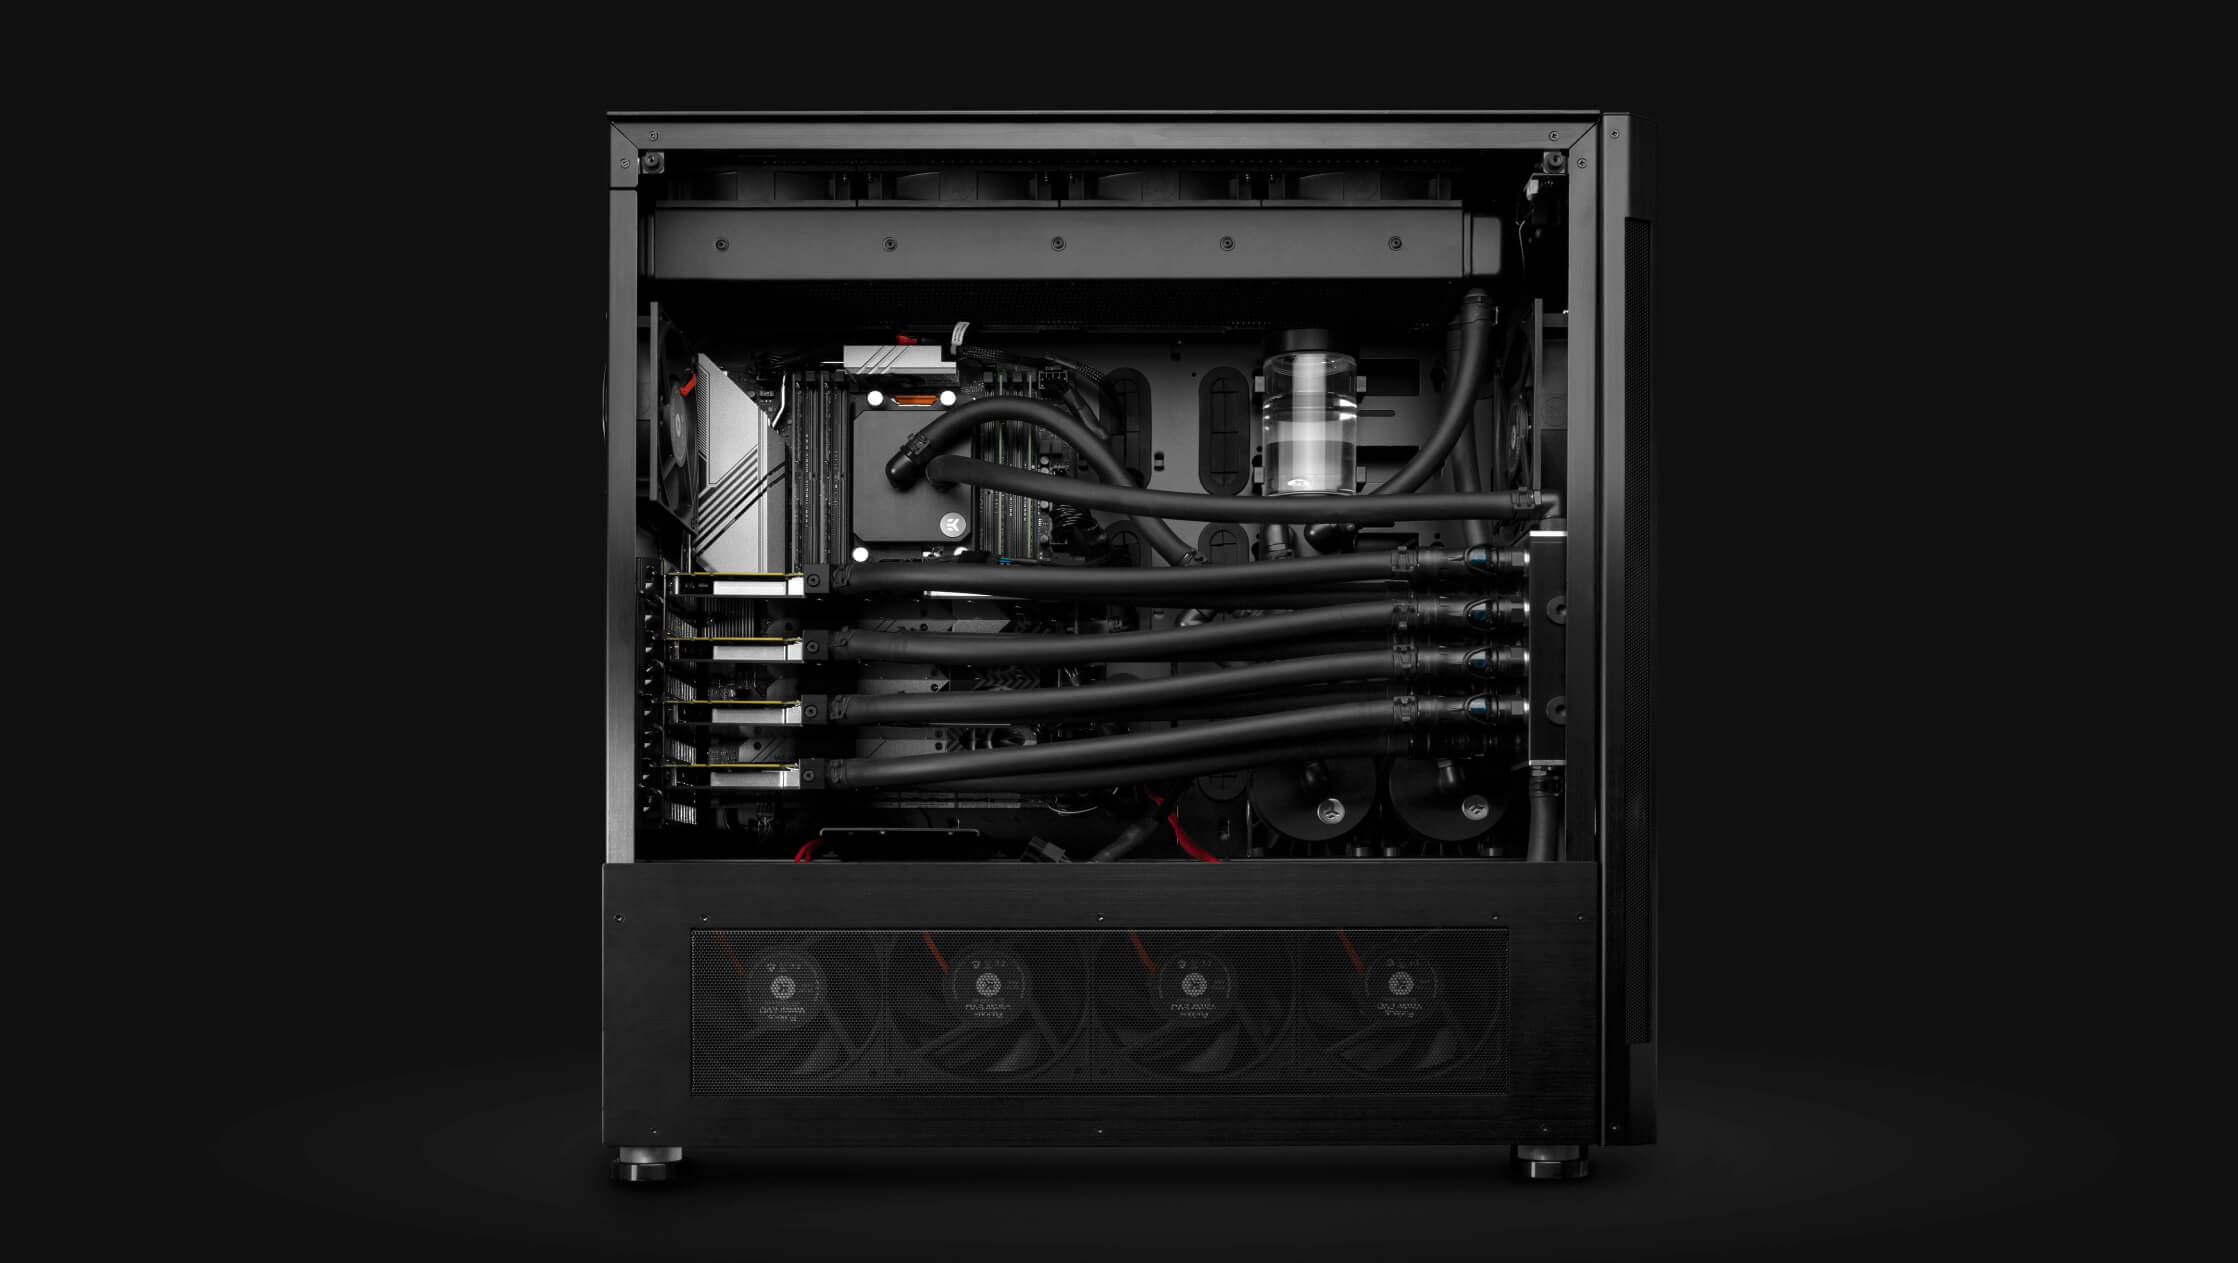 EK-Fluid Works Studio Series S5000 Workstation with 4 GPUs and high-performance CPU